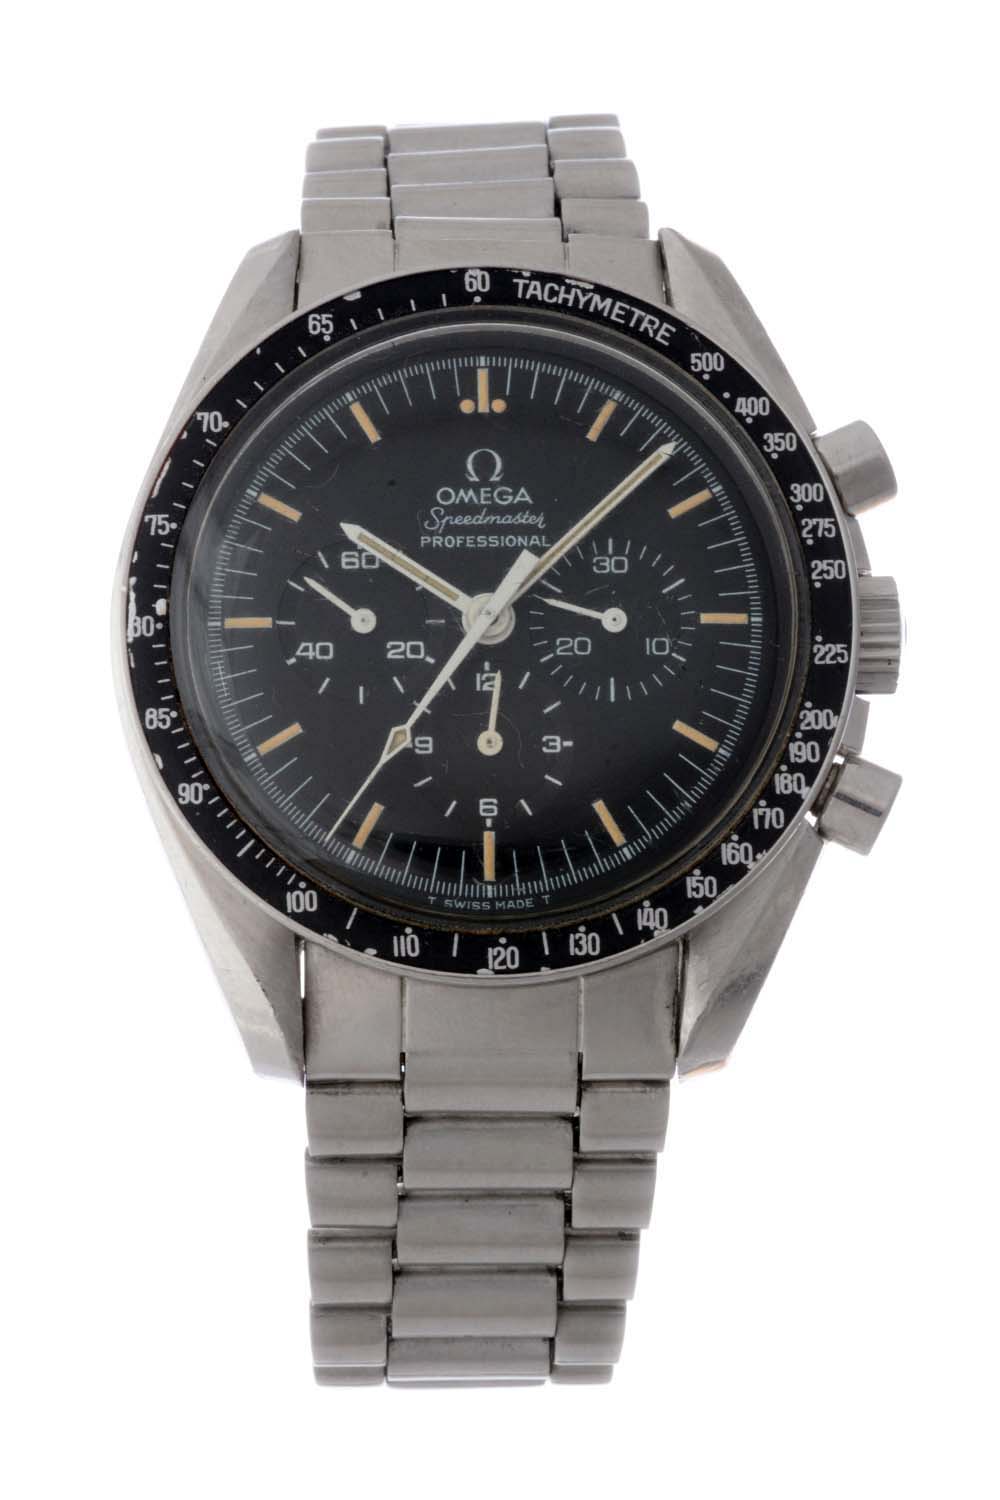 Omega Speedmaster Professional Wristwatch, estimated at $2,000-3,000.